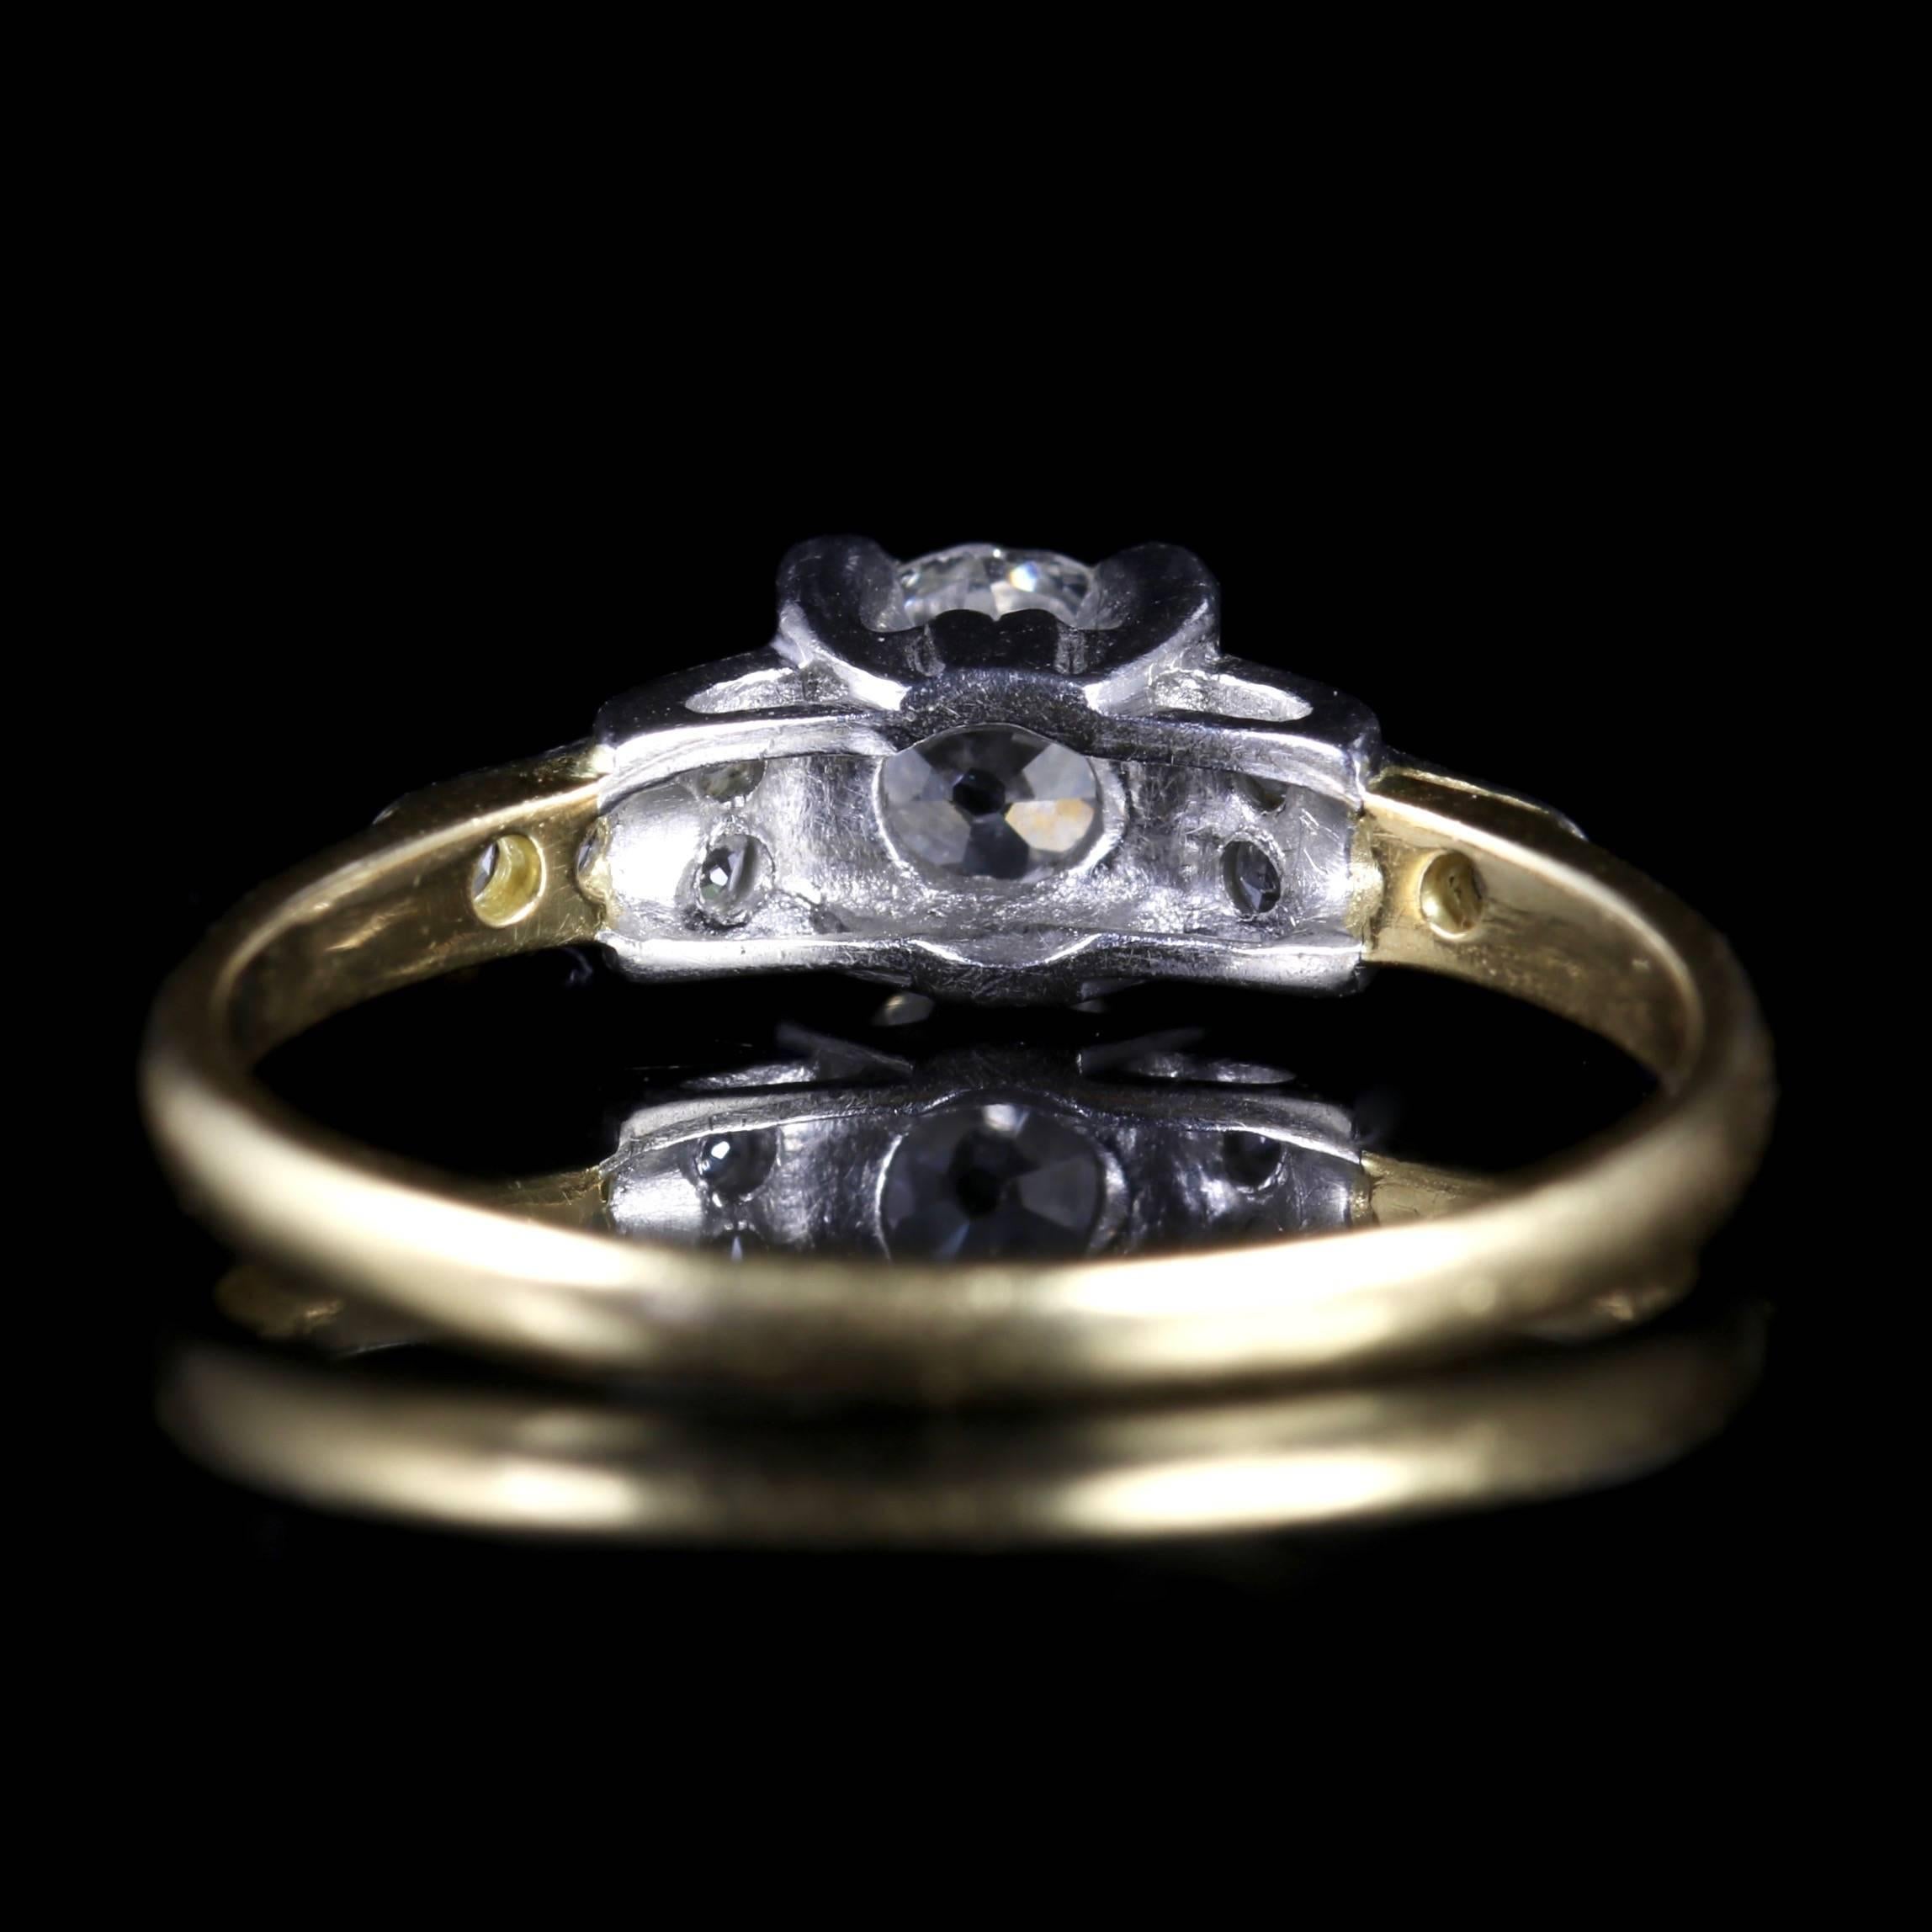 Cushion Cut Antique Victorian Diamond Engagement Ring 18 Carat Gold Ring, circa 1900